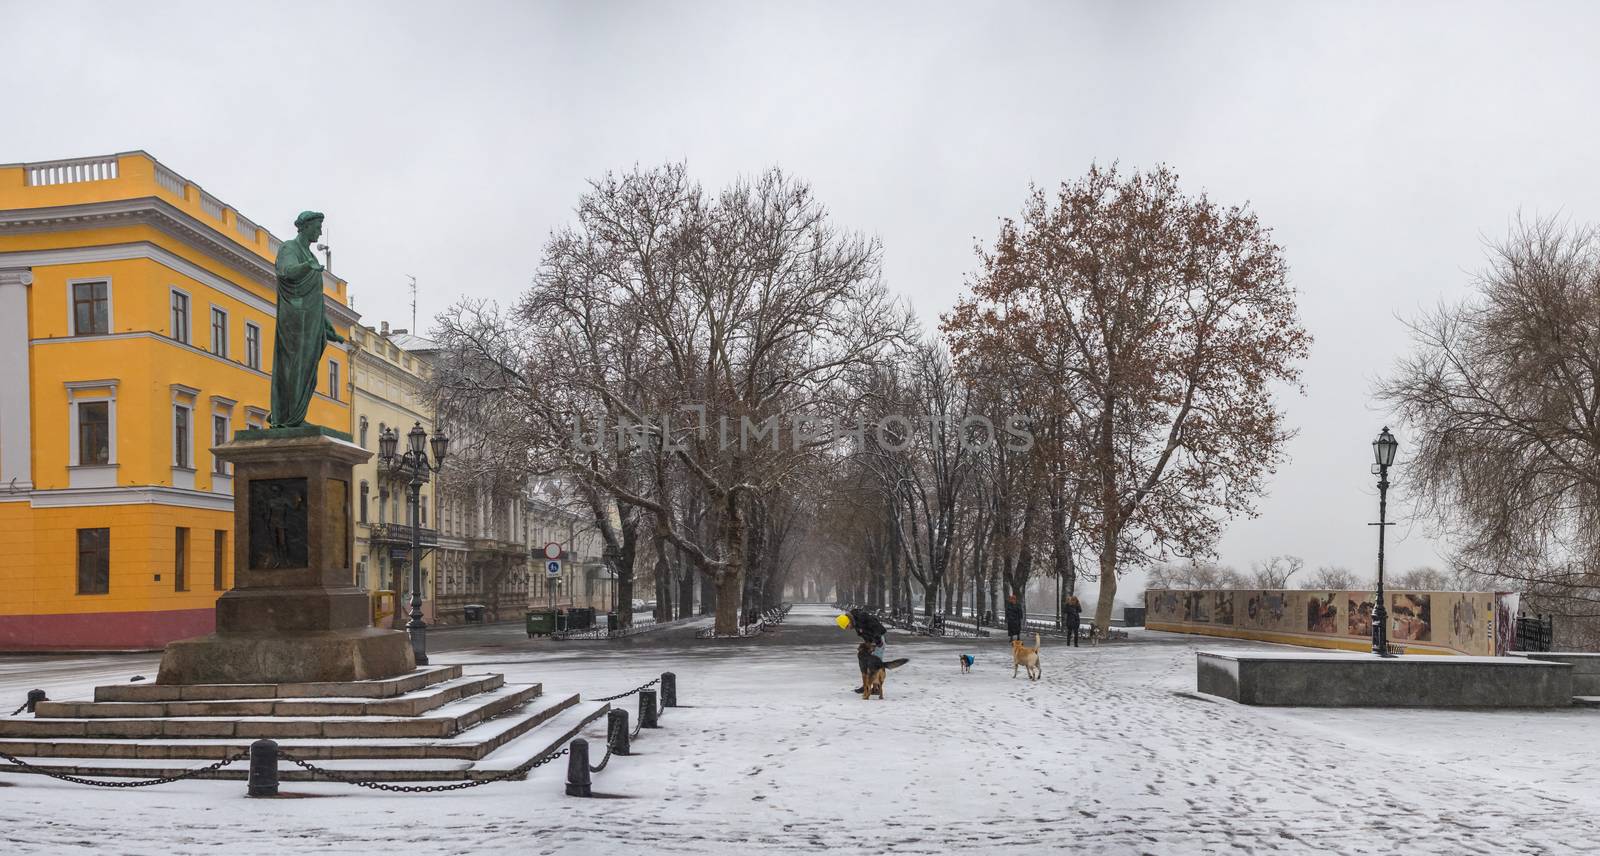 Snowy morning in Odessa, Ukraine by Multipedia